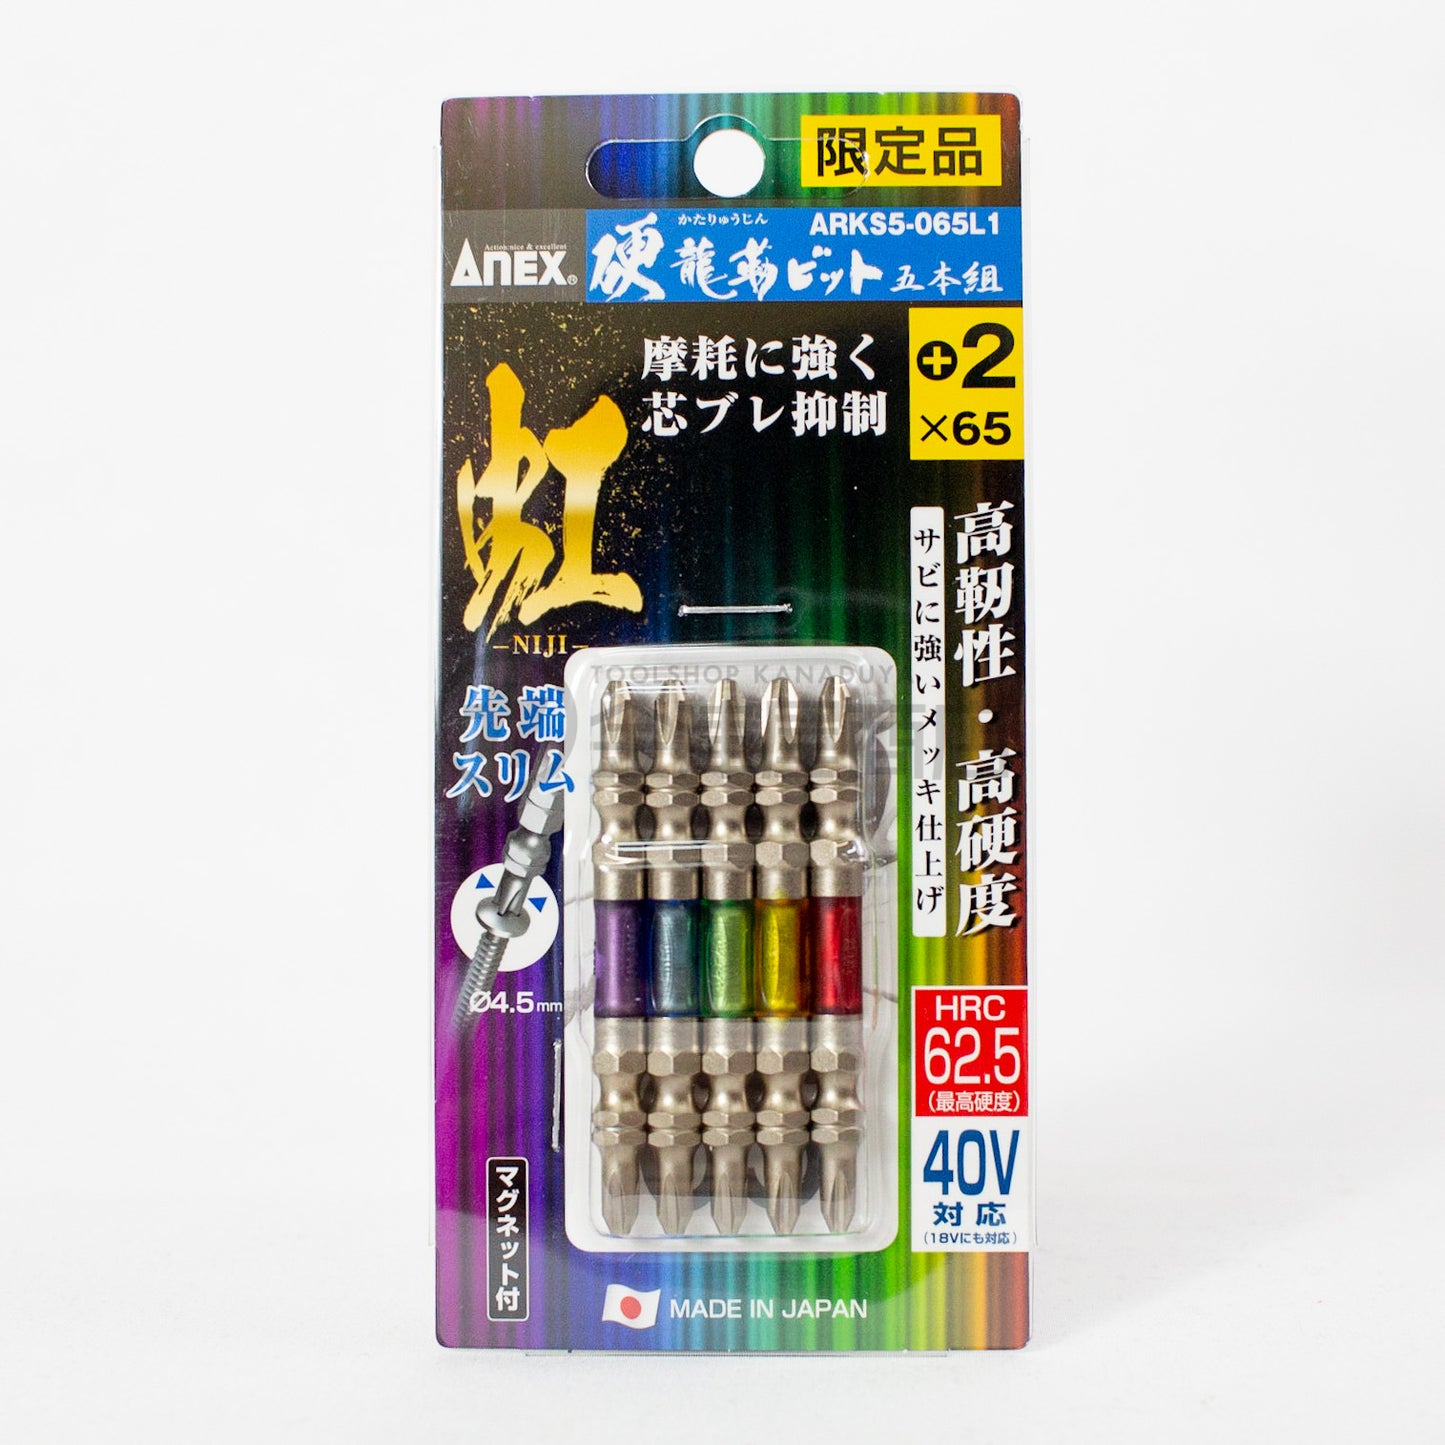 ANEX 硬龍靭ビットスリム 限定カラー 虹 5本組セット ARKS5-ビット-金津屋商店